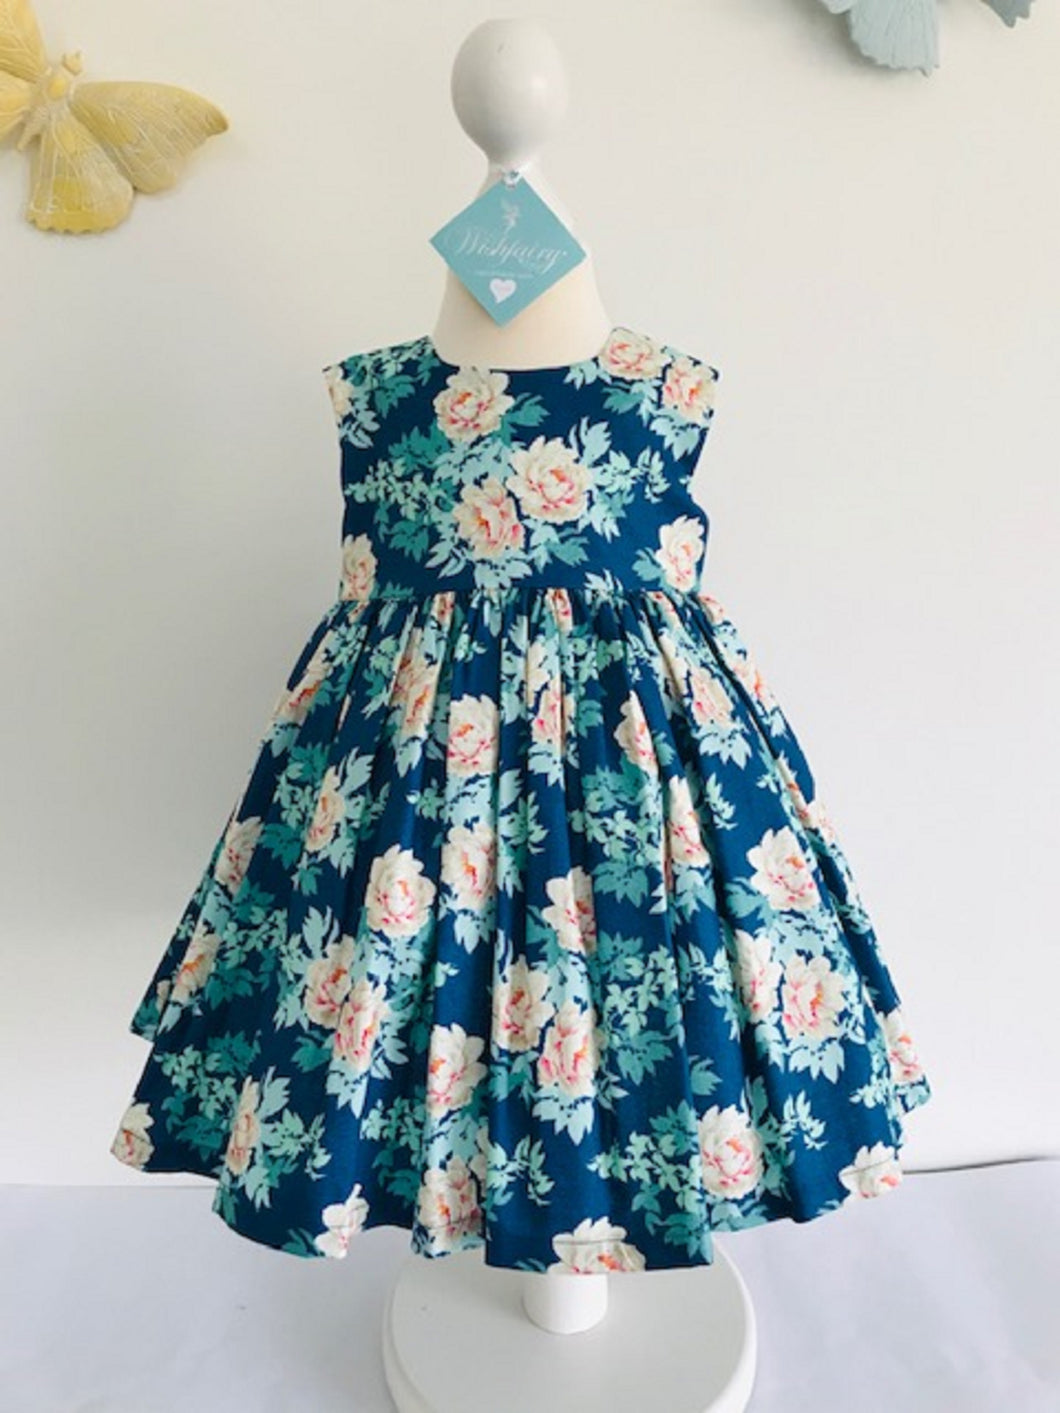 The Wishfairy Bunty Baby Dress (Peach Floral on Blue)